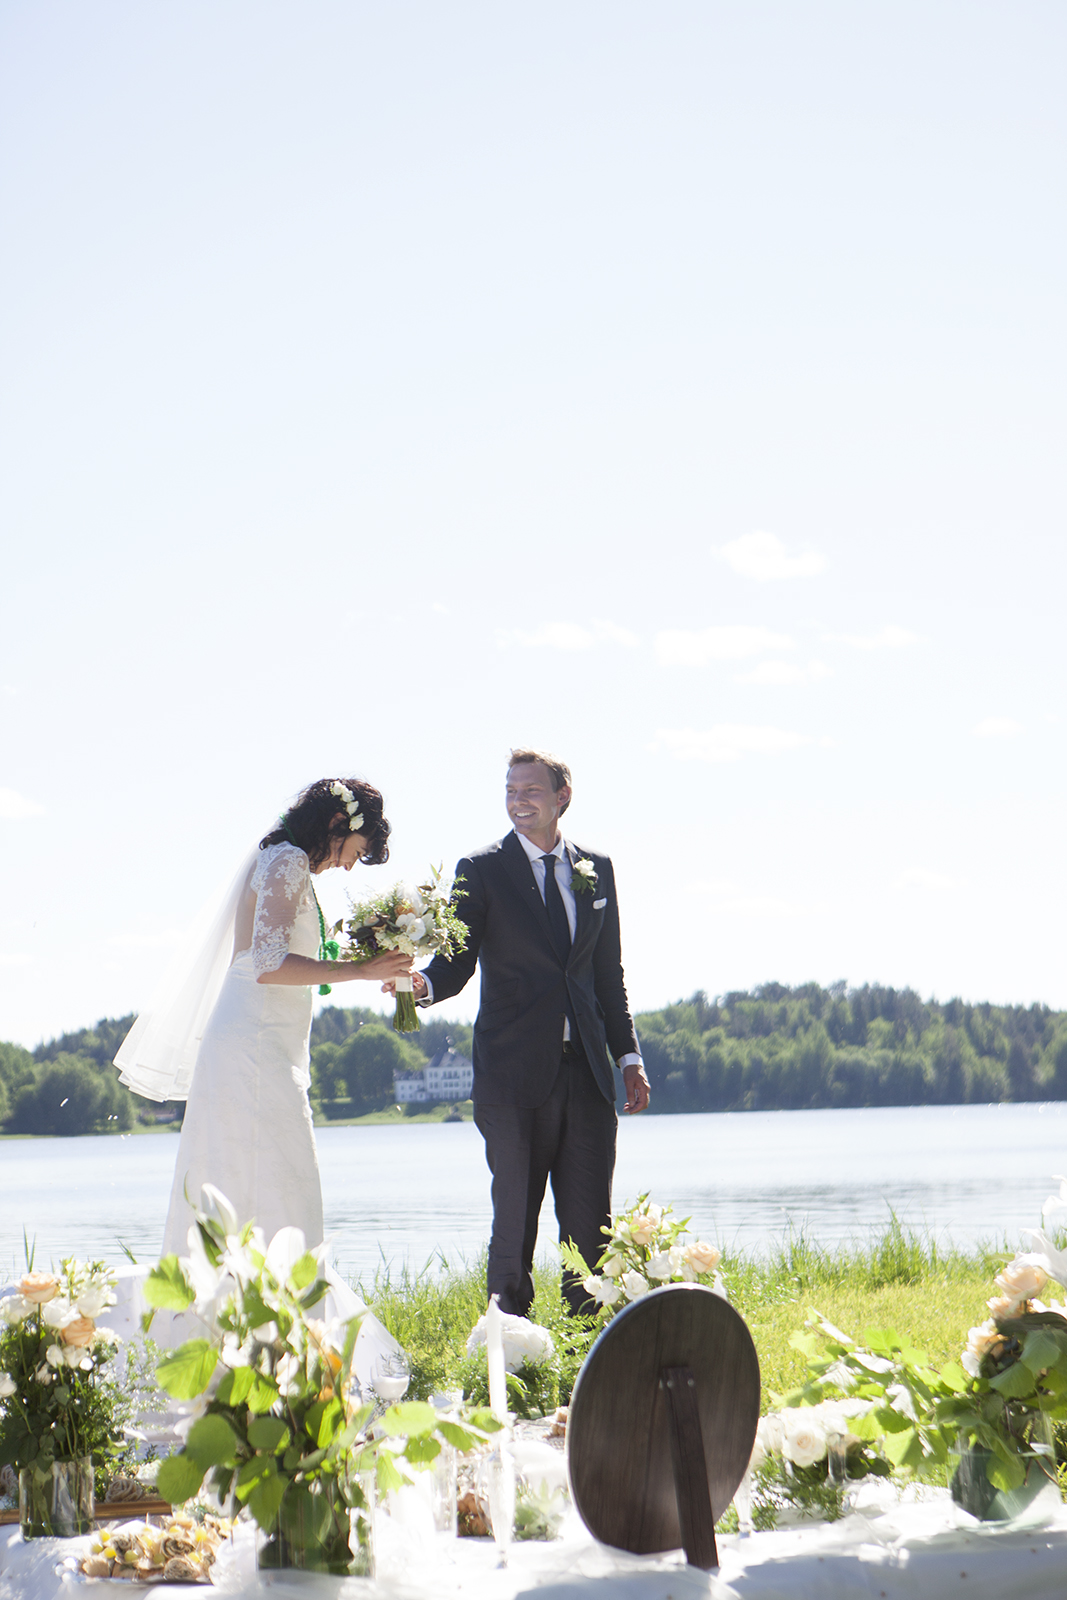 Bröllop på landet, bröllopslokal festlokal lokal event södermanland sörmland nyköping stockholm